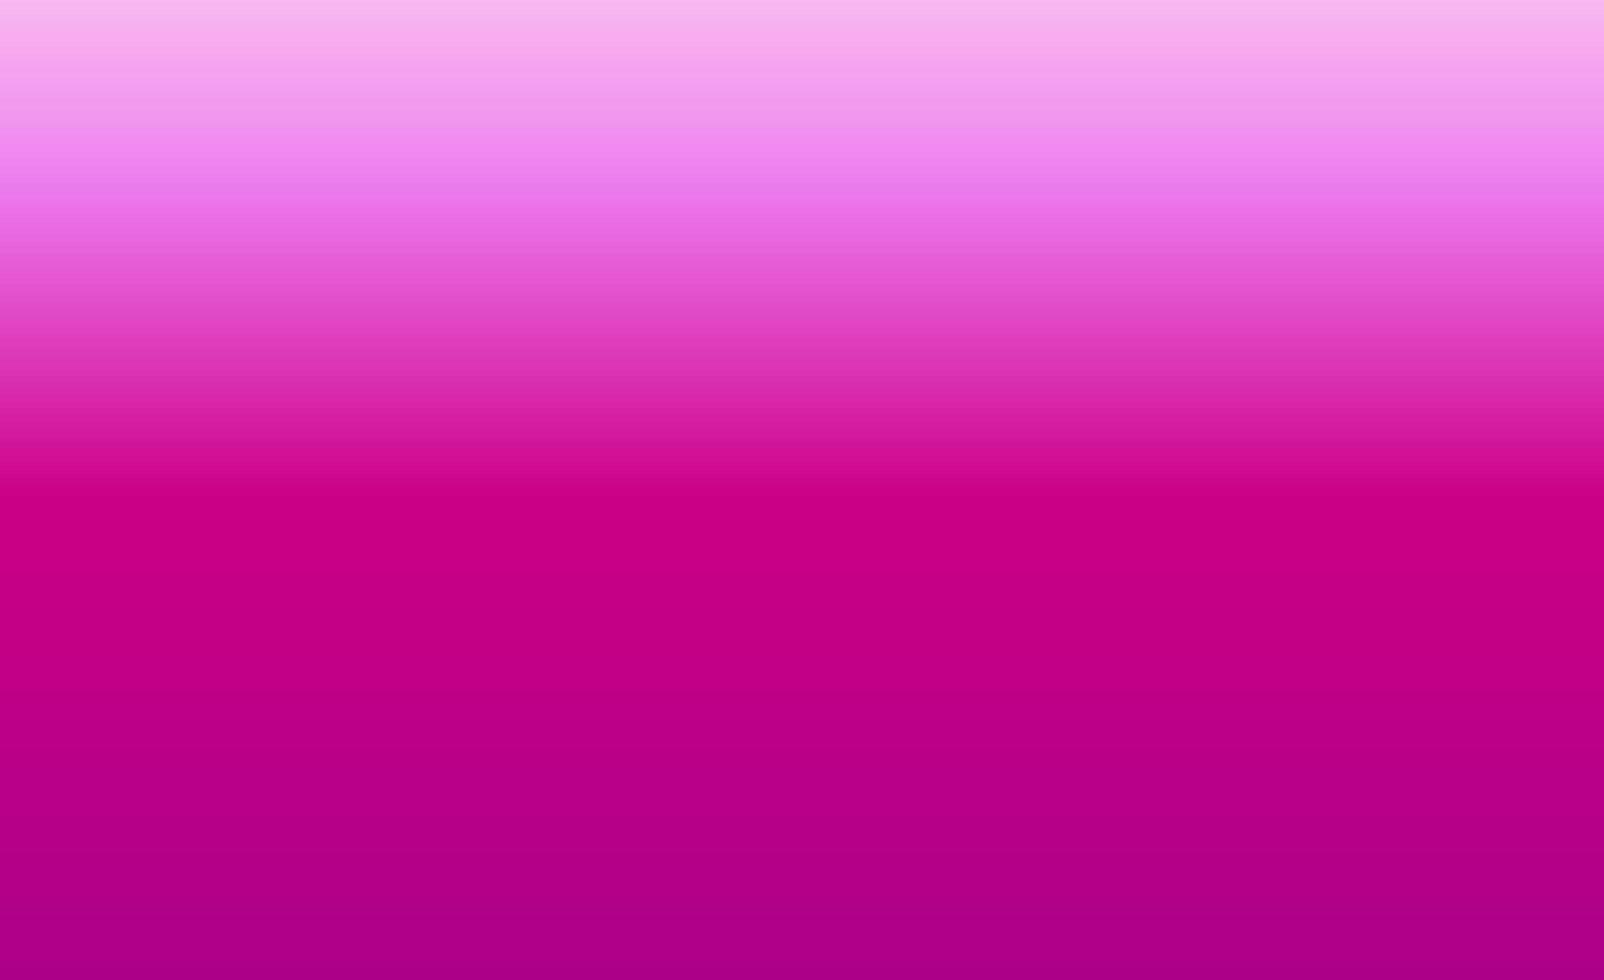 fondo de pantalla de textura degradada degradado rosa abstracto como fondo de ilustración foto